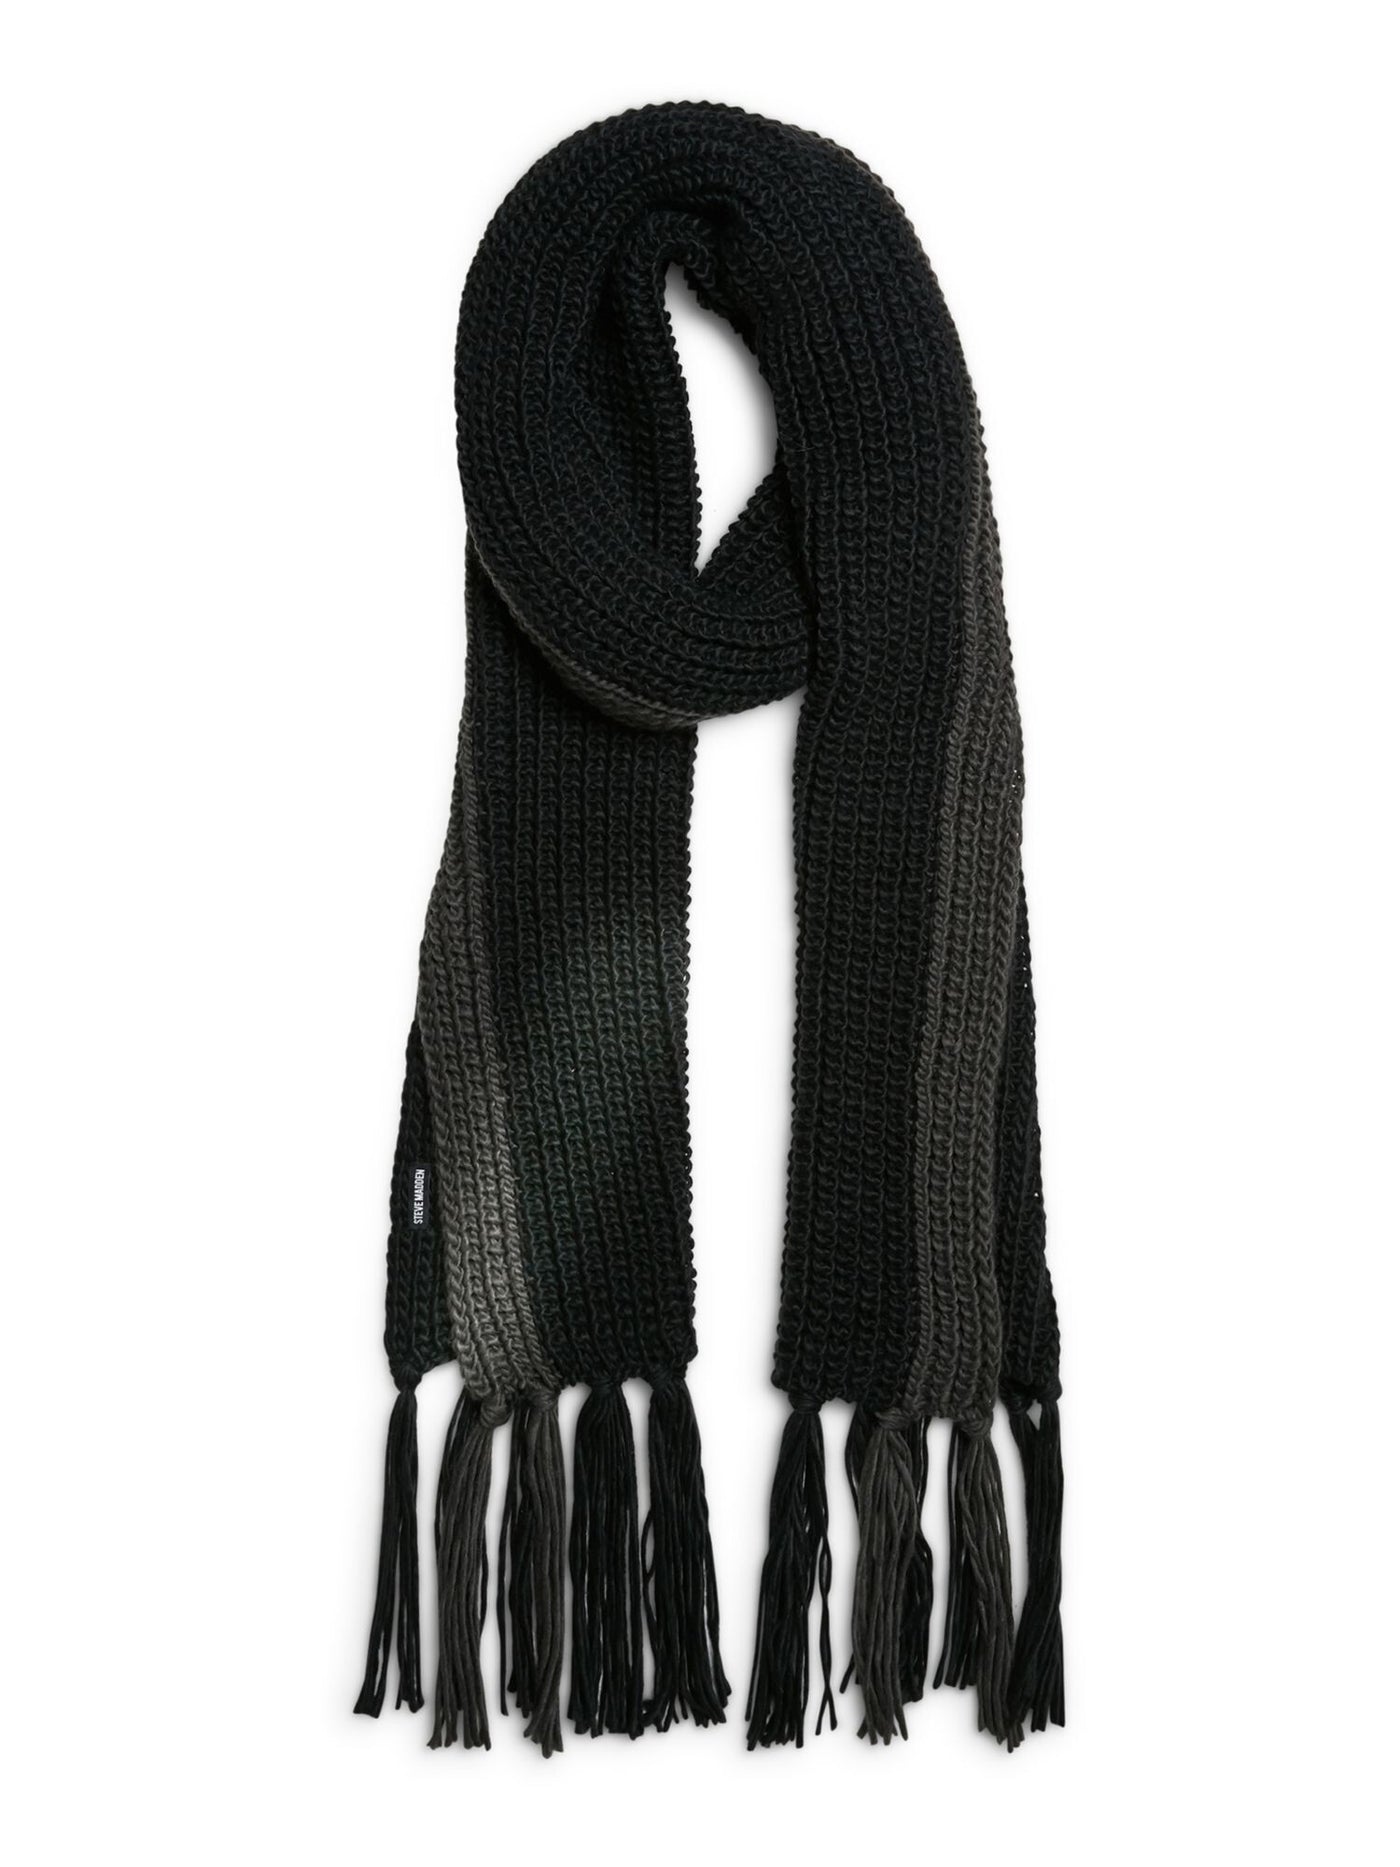 STEVE MADDEN Black Acrylic Knitted Winter Scarf